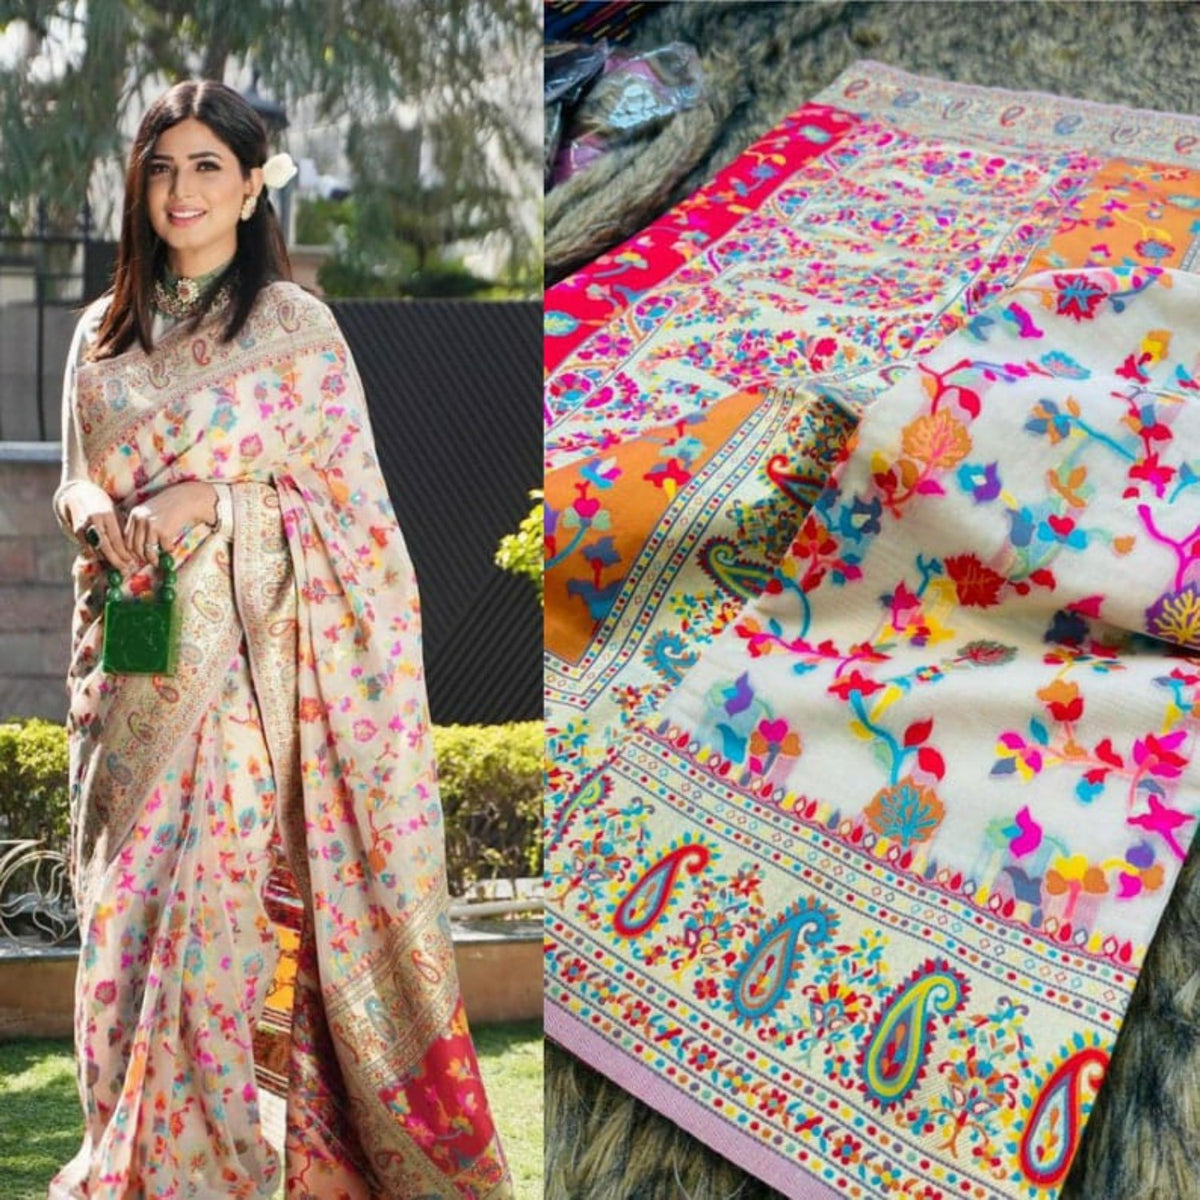 Bollywood Indian Pakistani Ethnic Party Wear Style Pure Soft Kan Silk Saree/Sari Code C 43